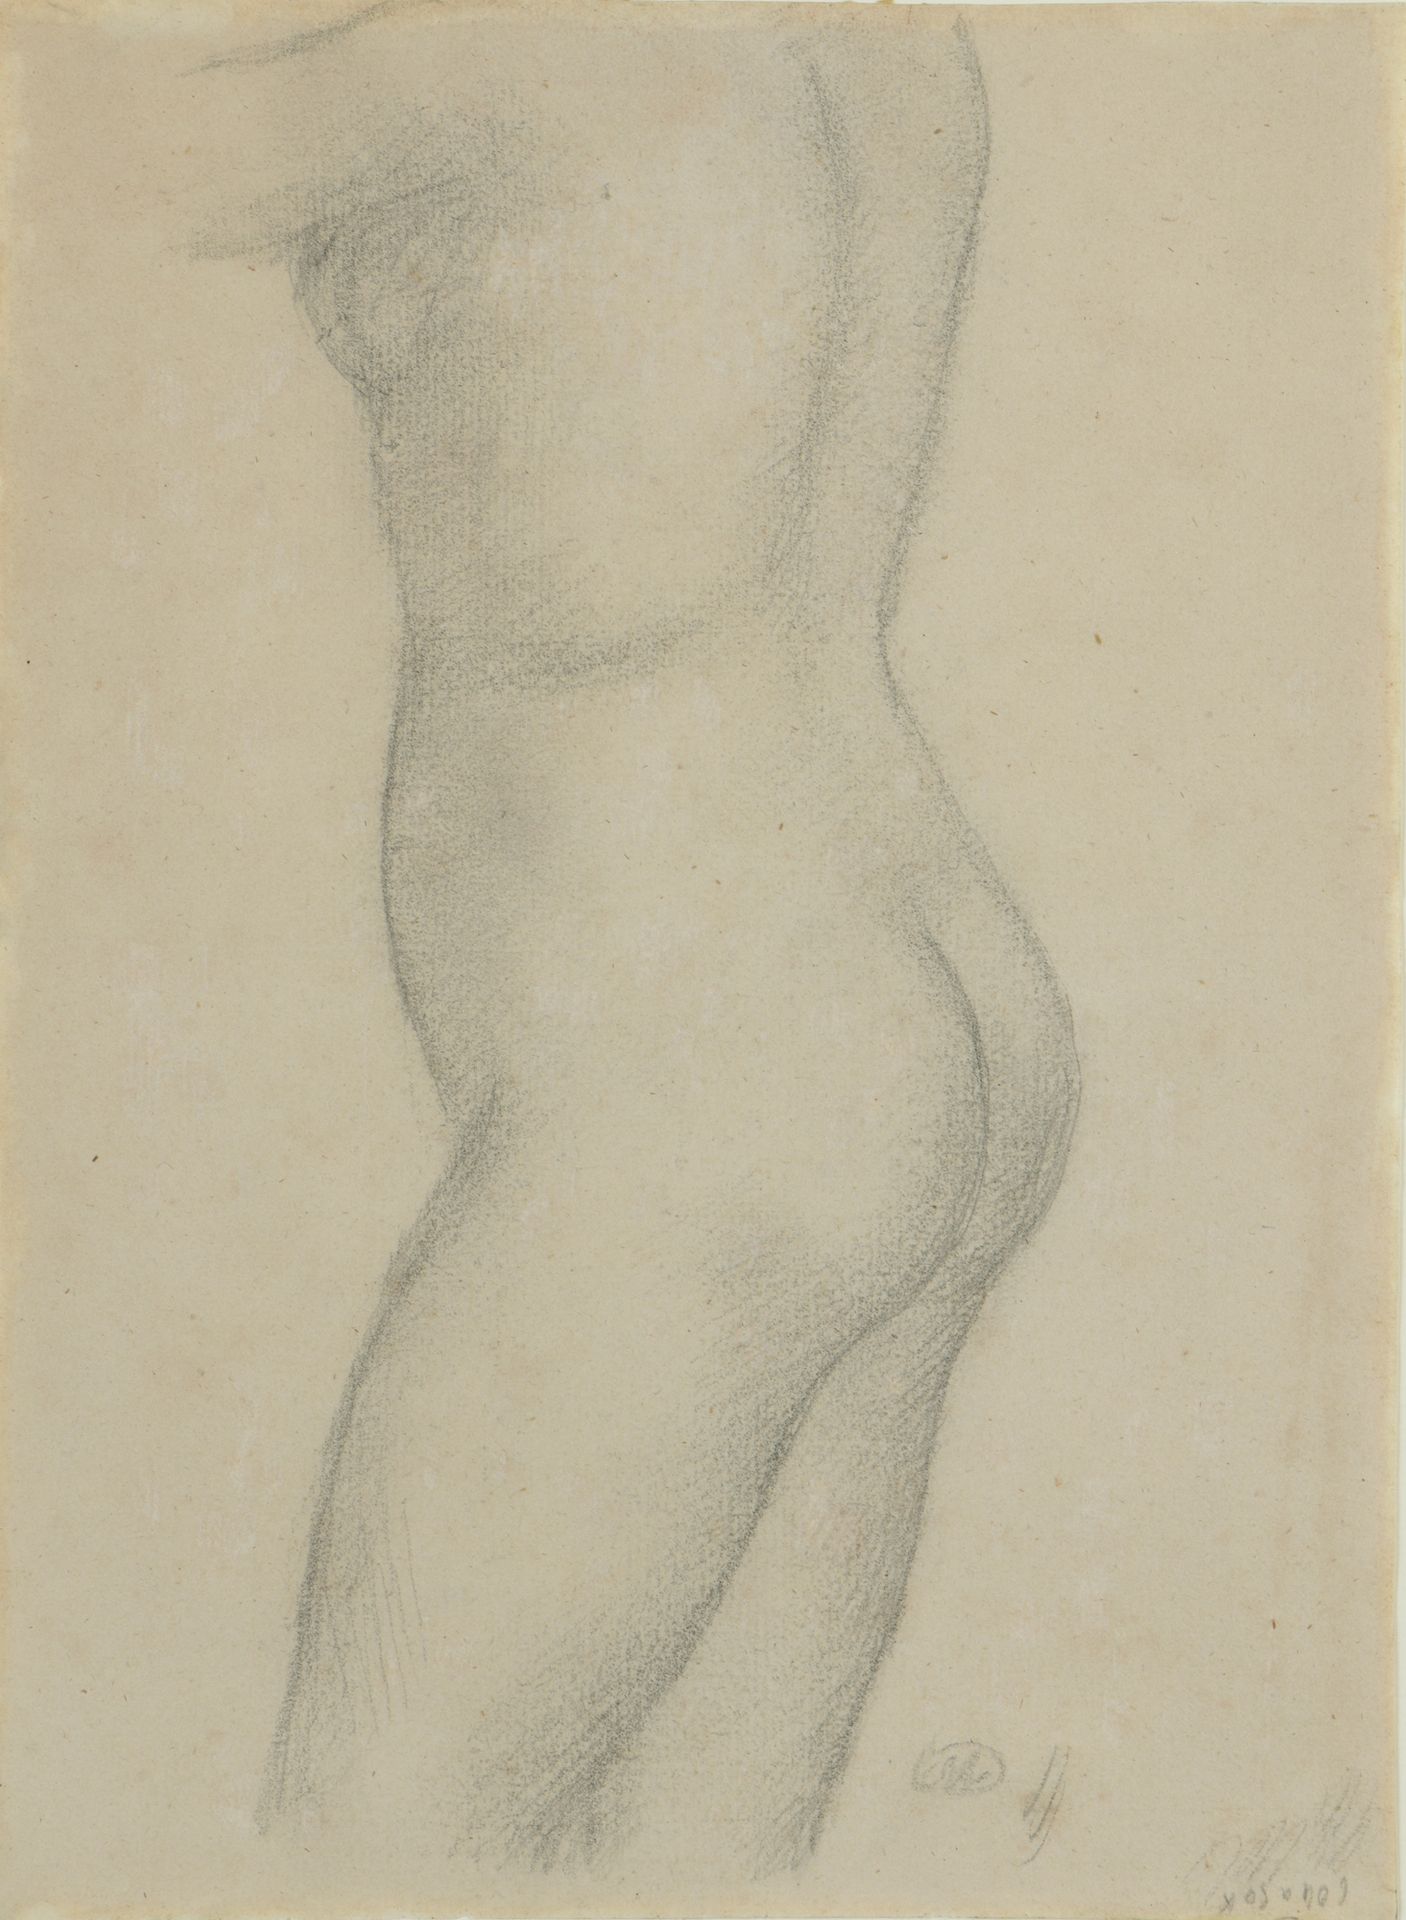 Null Aristide Maillol (1861-1944) 

Desnudo femenino

Lápiz negro, difuminado 

&hellip;